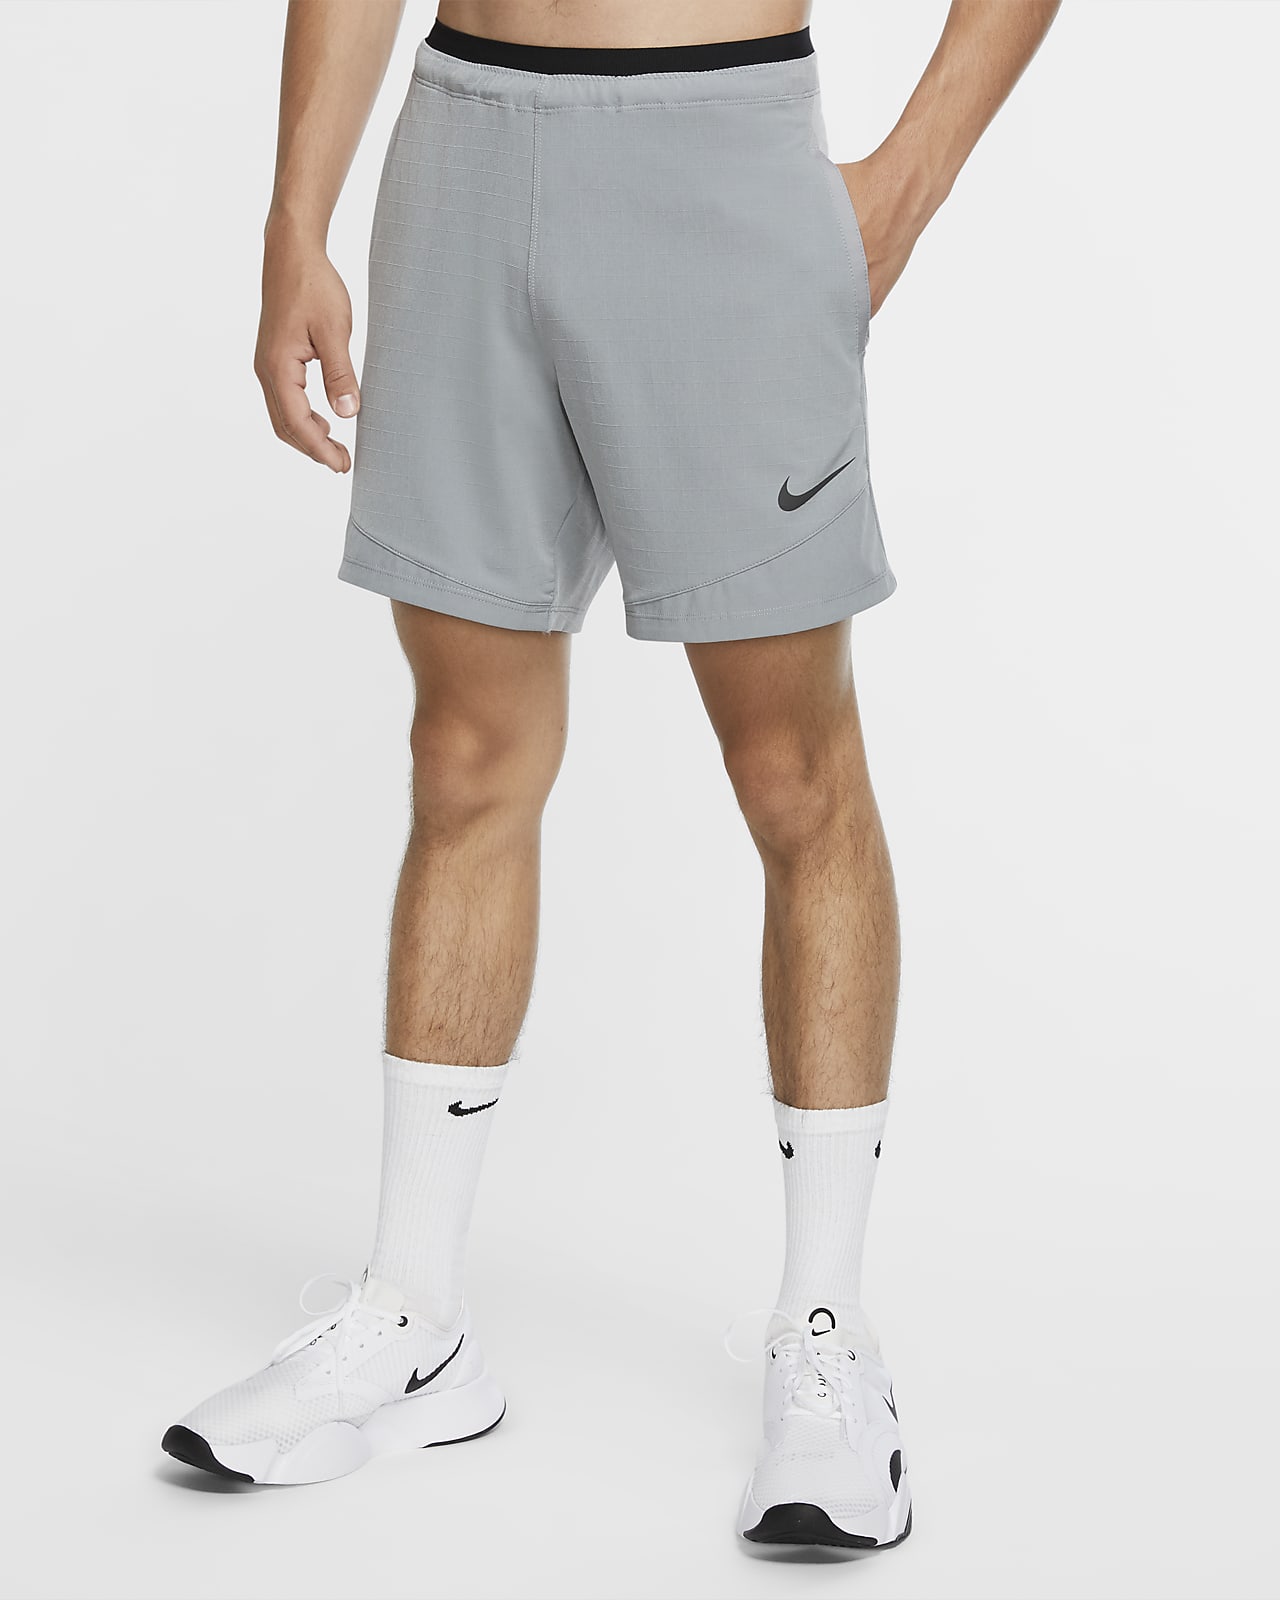 Nike公式 ナイキ プロ レップ メンズショートパンツ オンラインストア 通販サイト